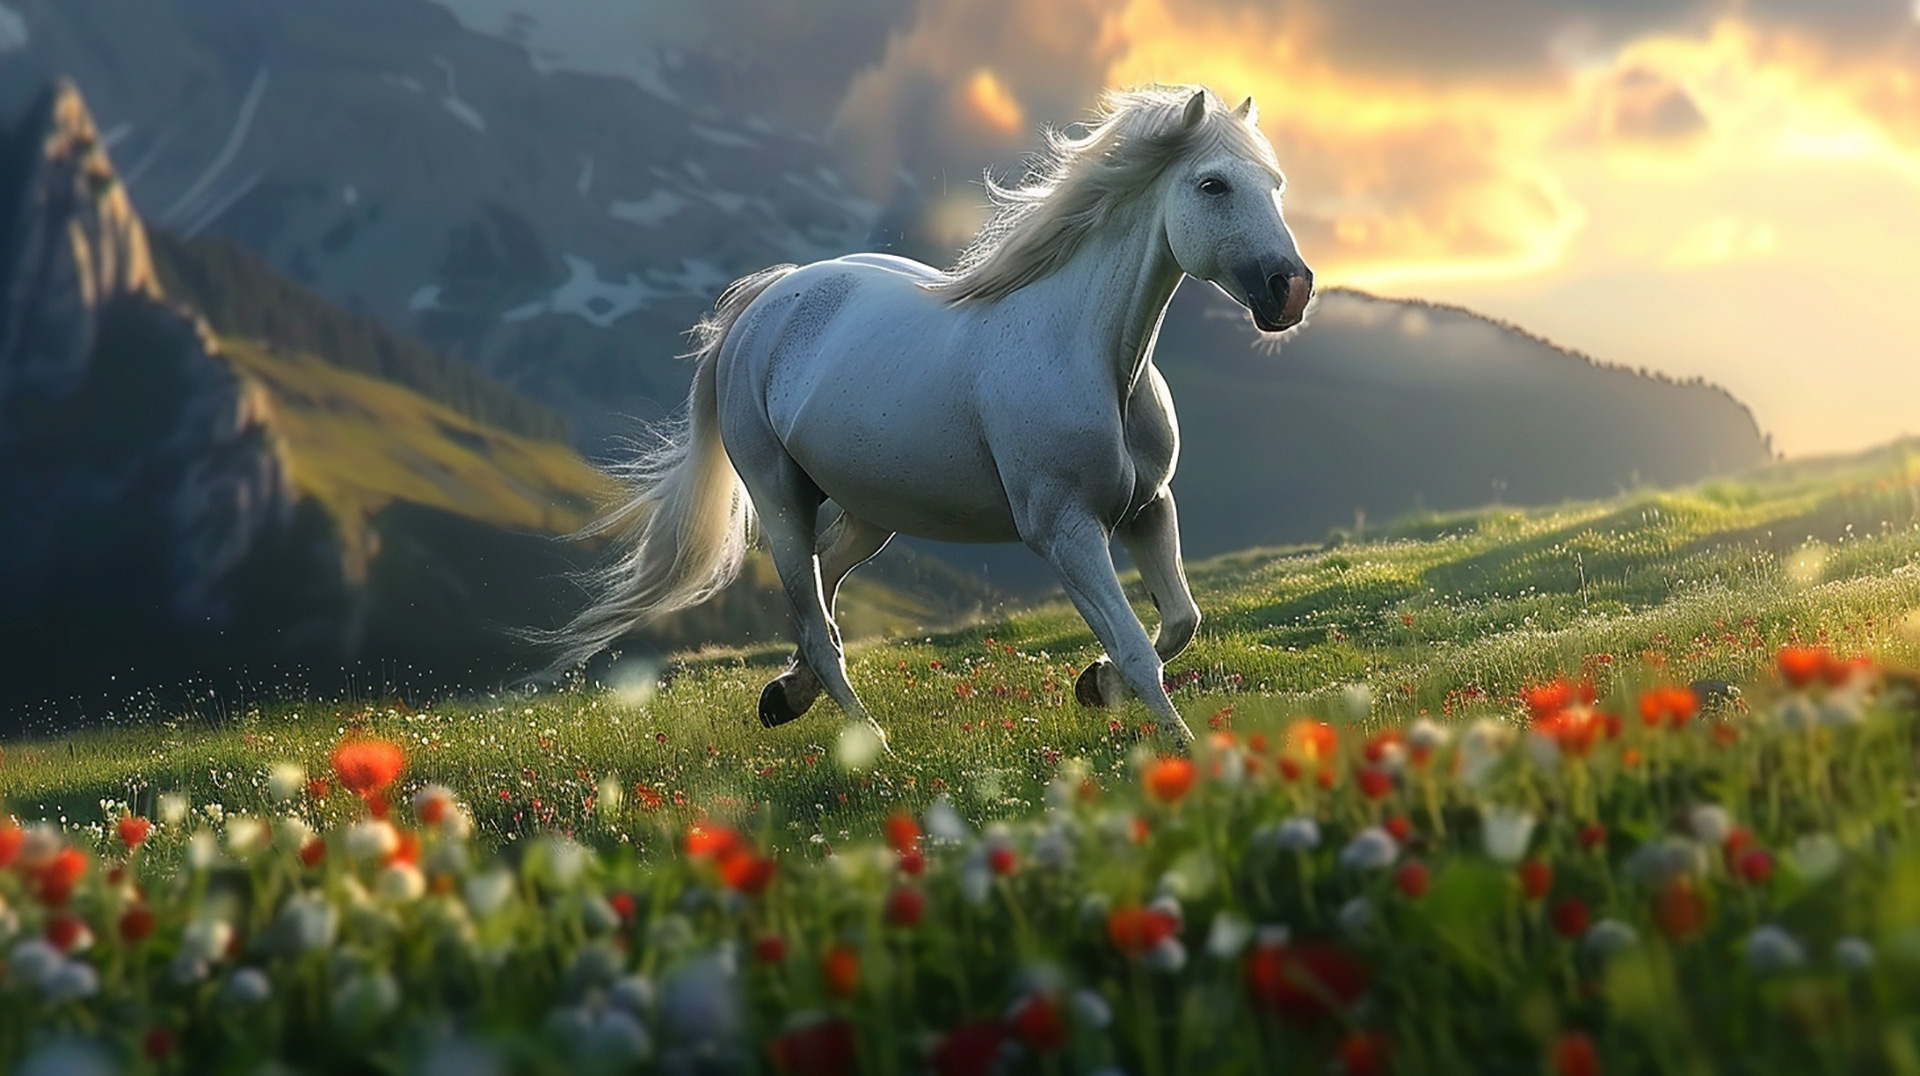 Gallant Horse: Free HD Wallpaper for Desktop